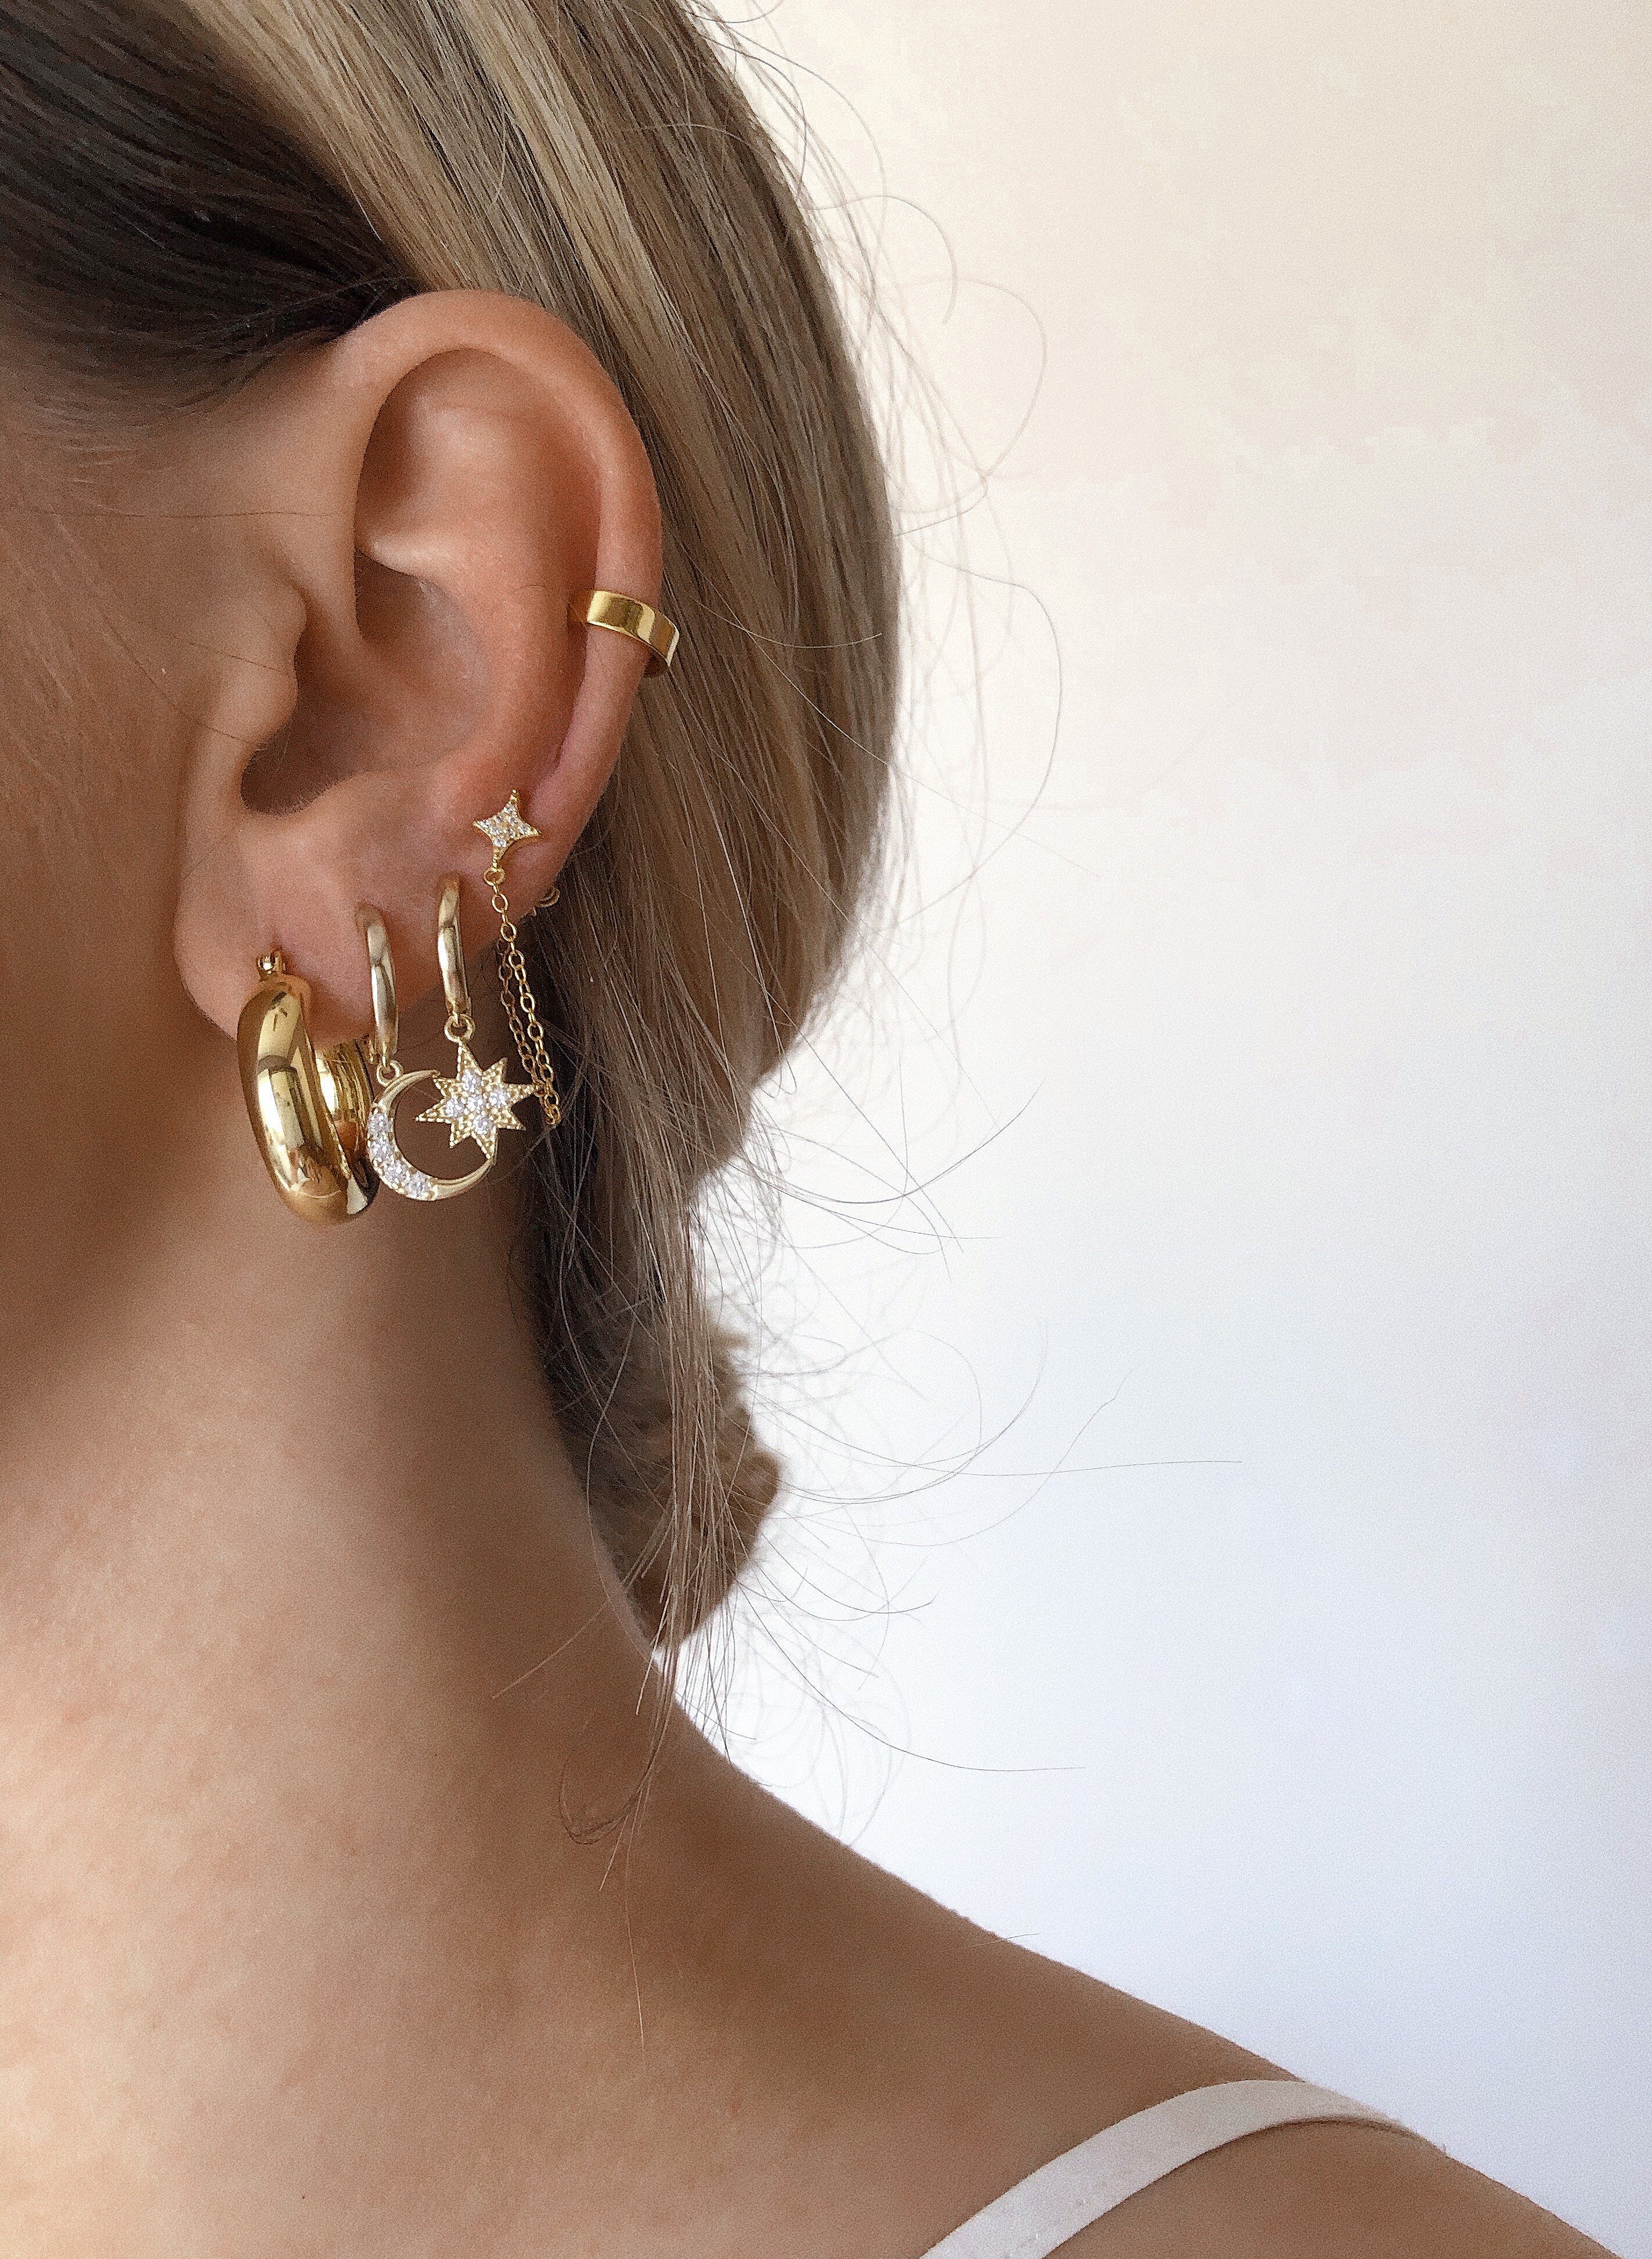 Meideya Jewelry - ear stack with star chain earring